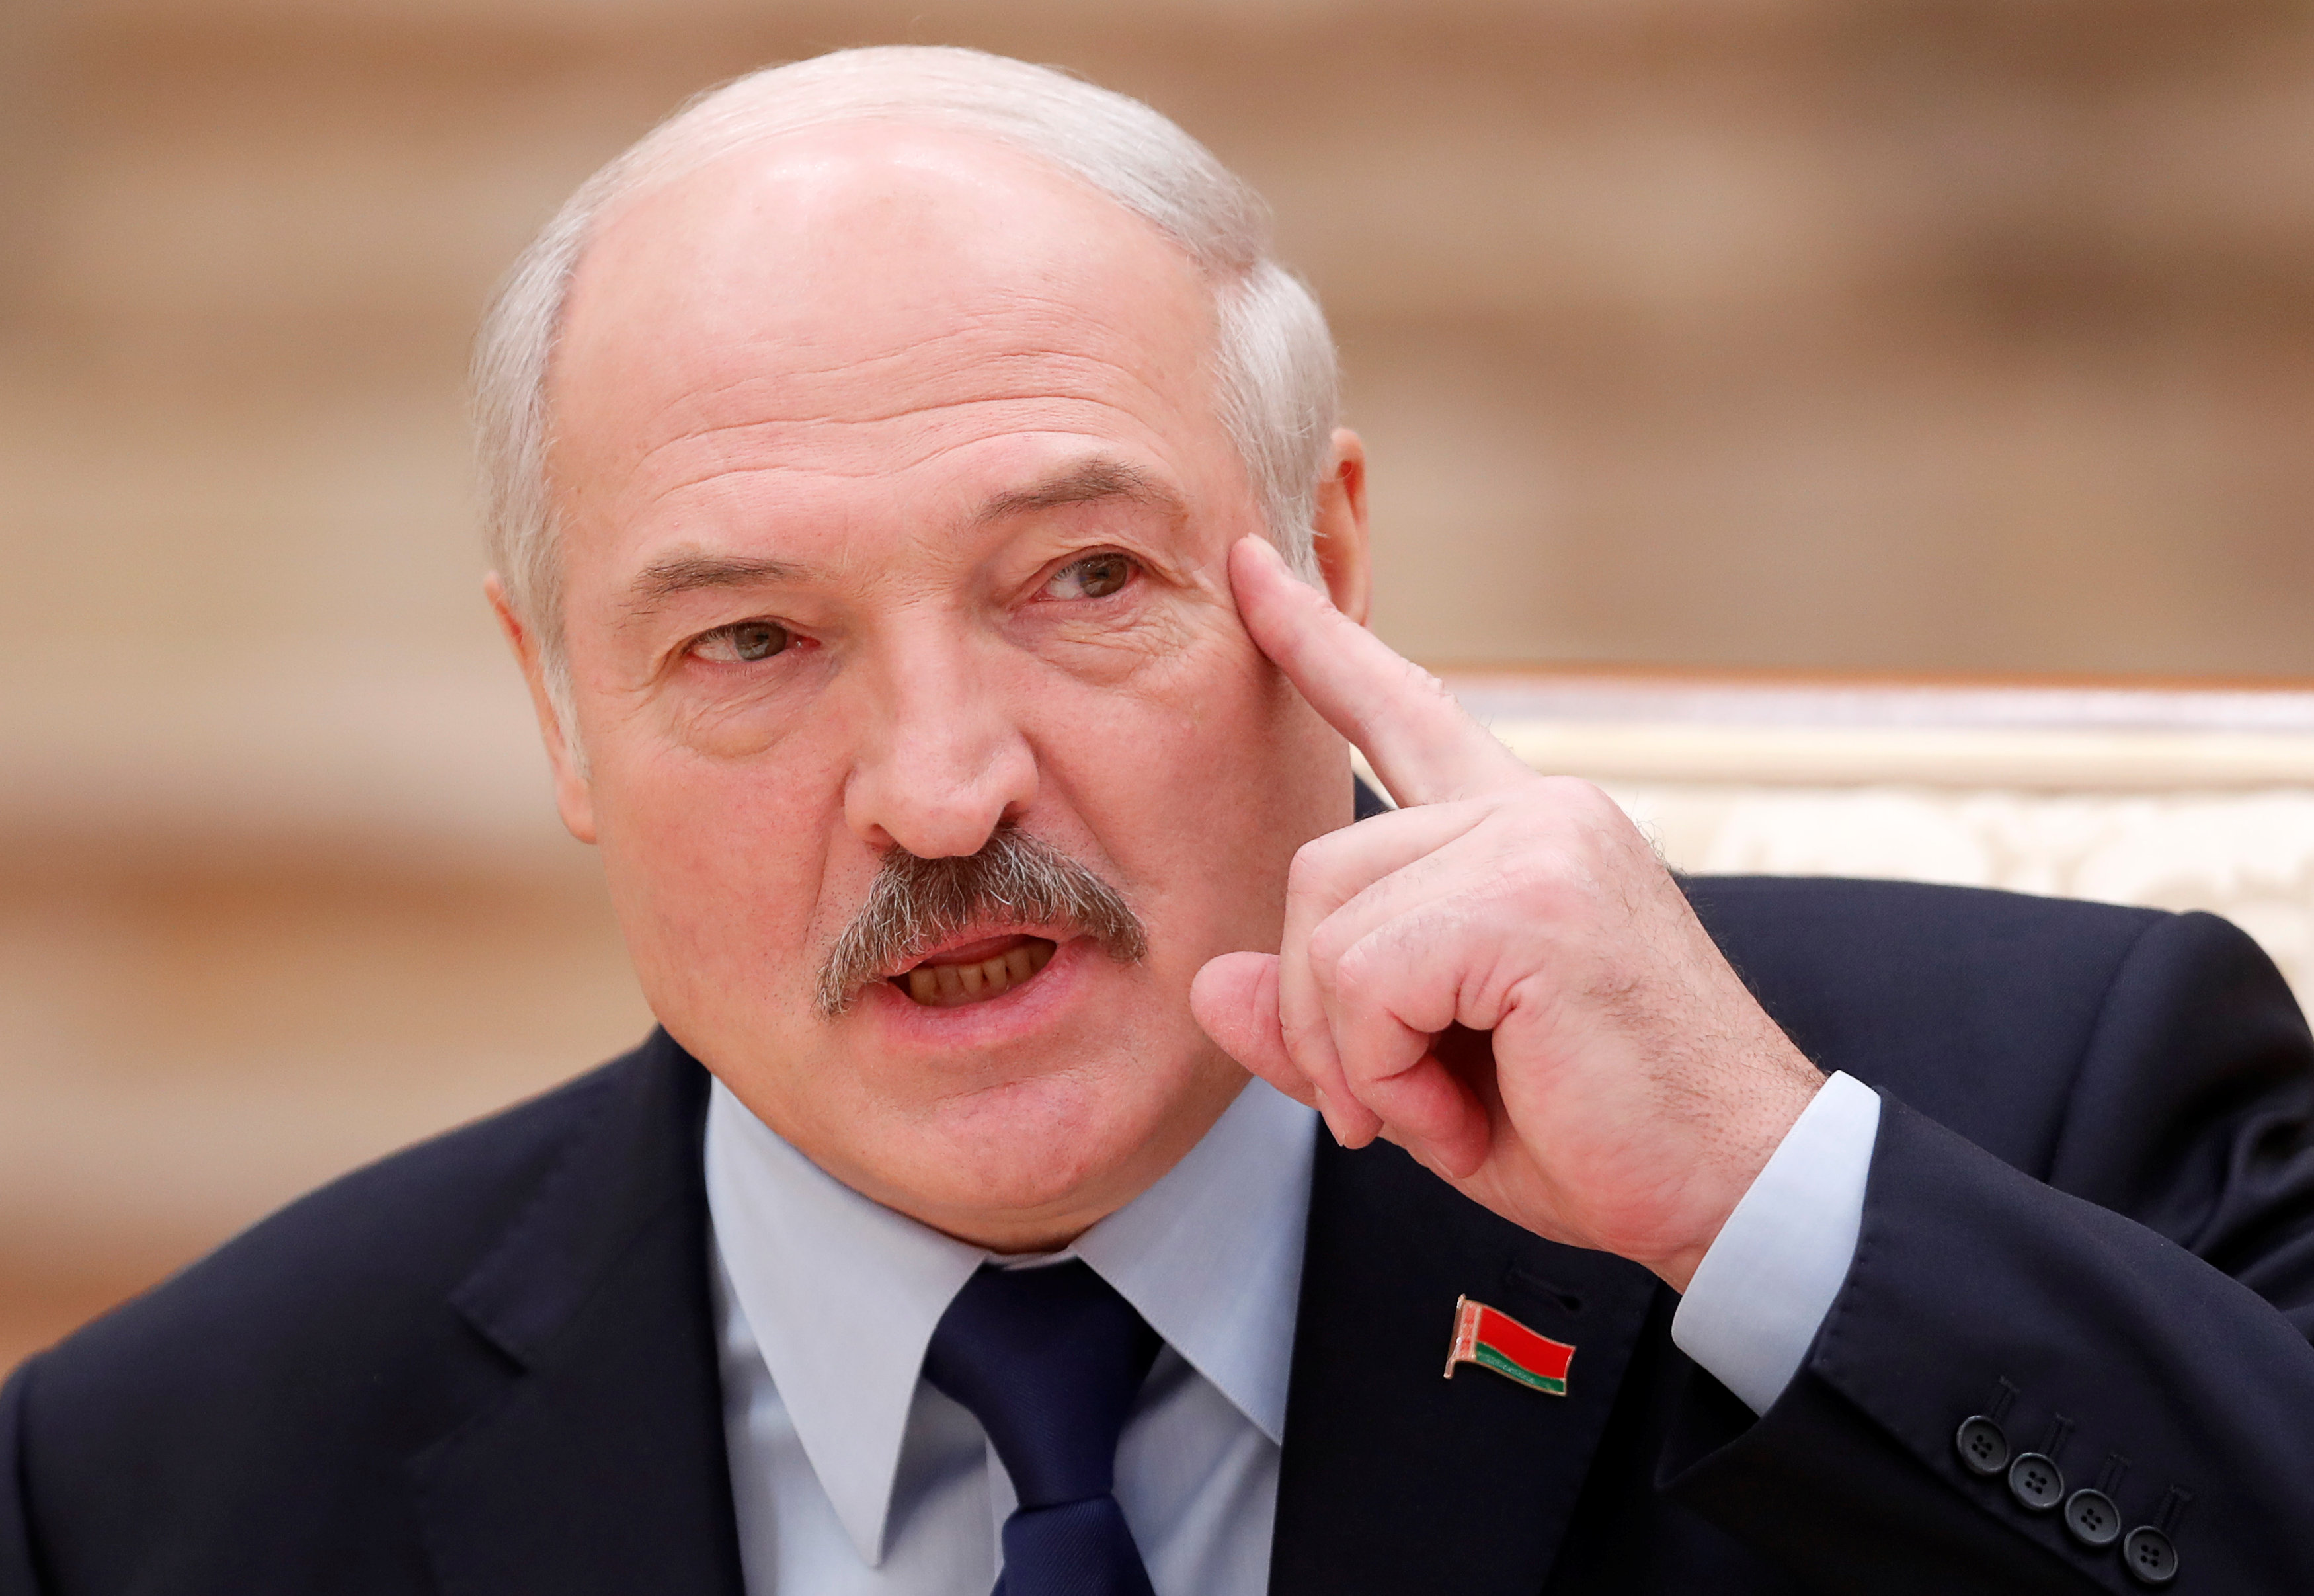 Сколько лукашенко у власти президентом белоруссии. Портрет президента Белоруссии Лукашенко.